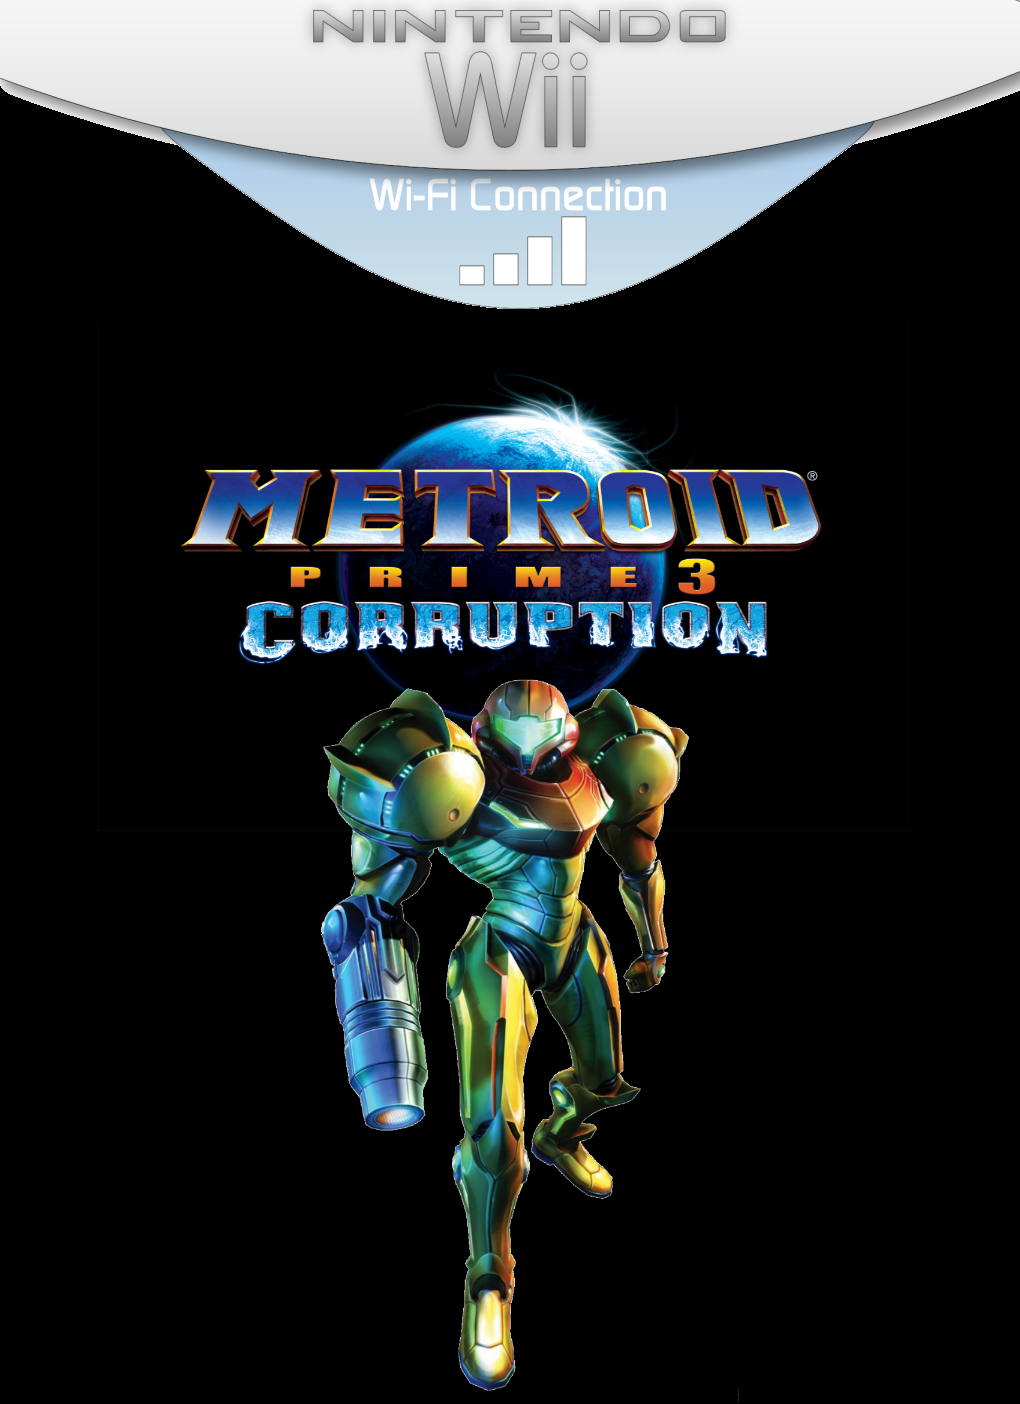 Metroid Prime 3: Corruption box cover